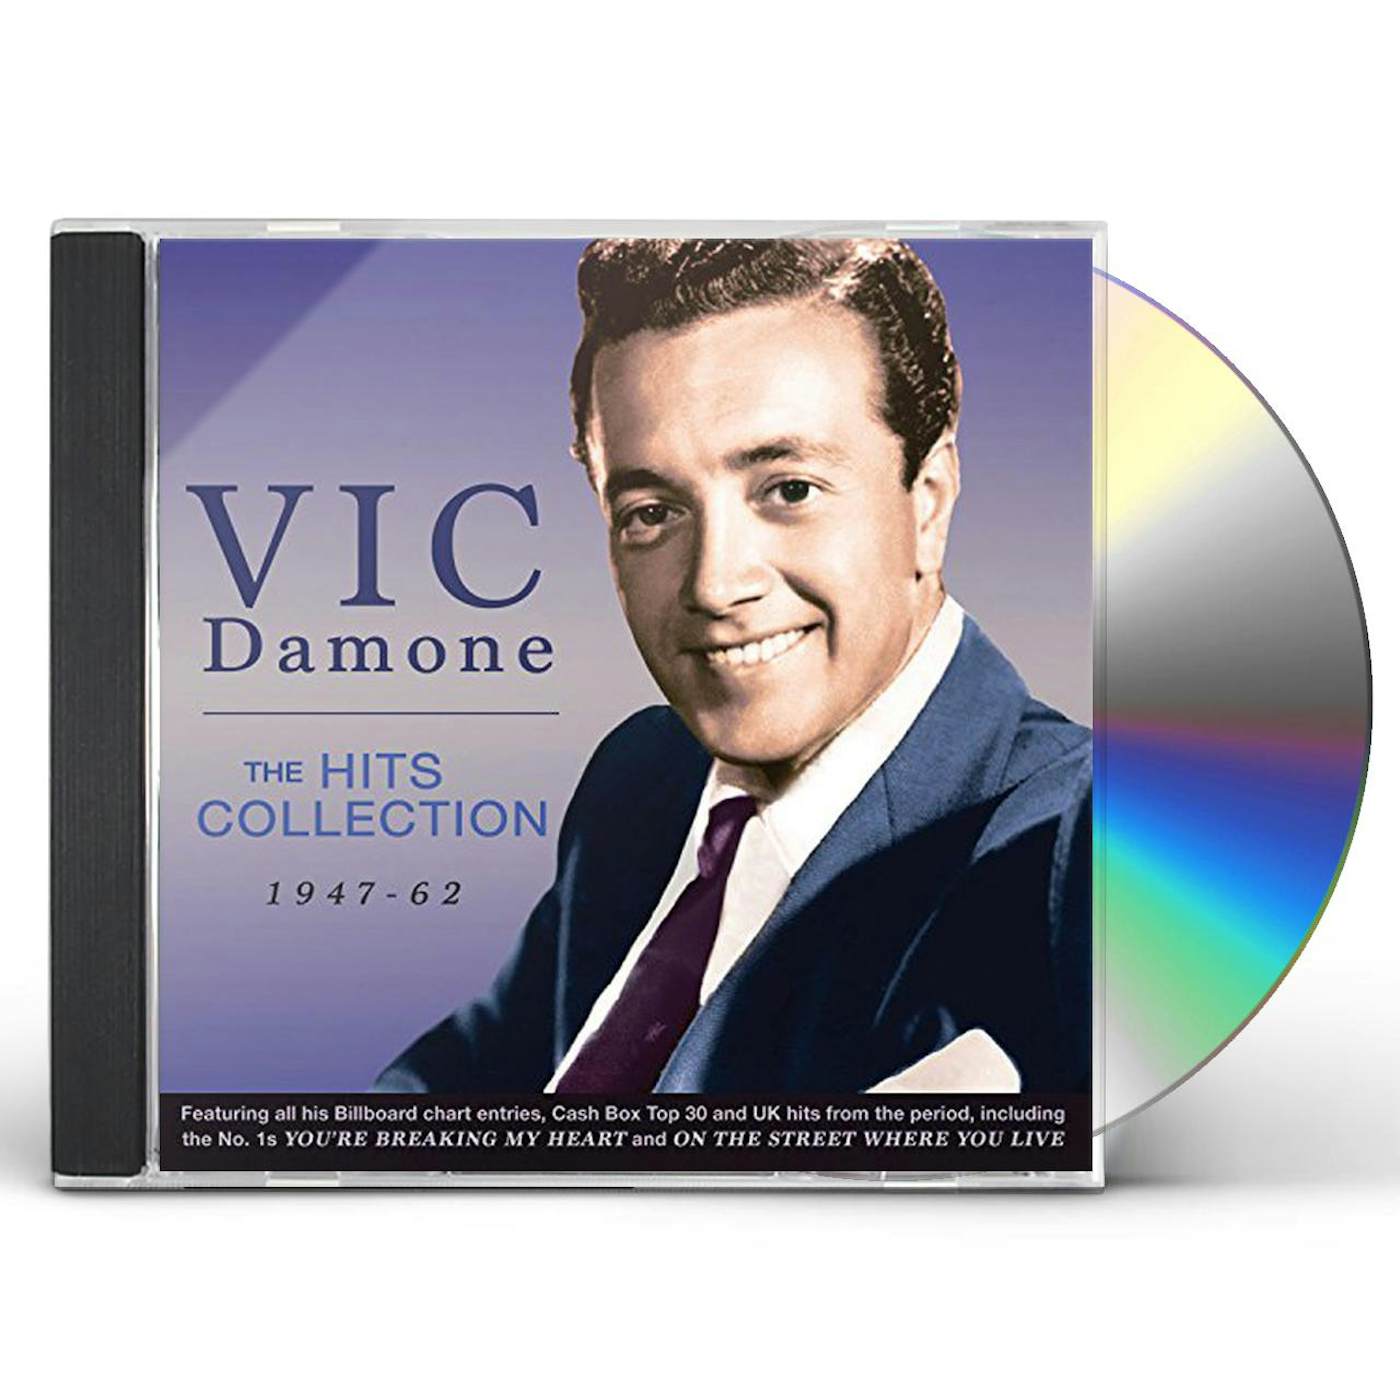 Vic Damone HITS COLLECTION 1947-62 CD